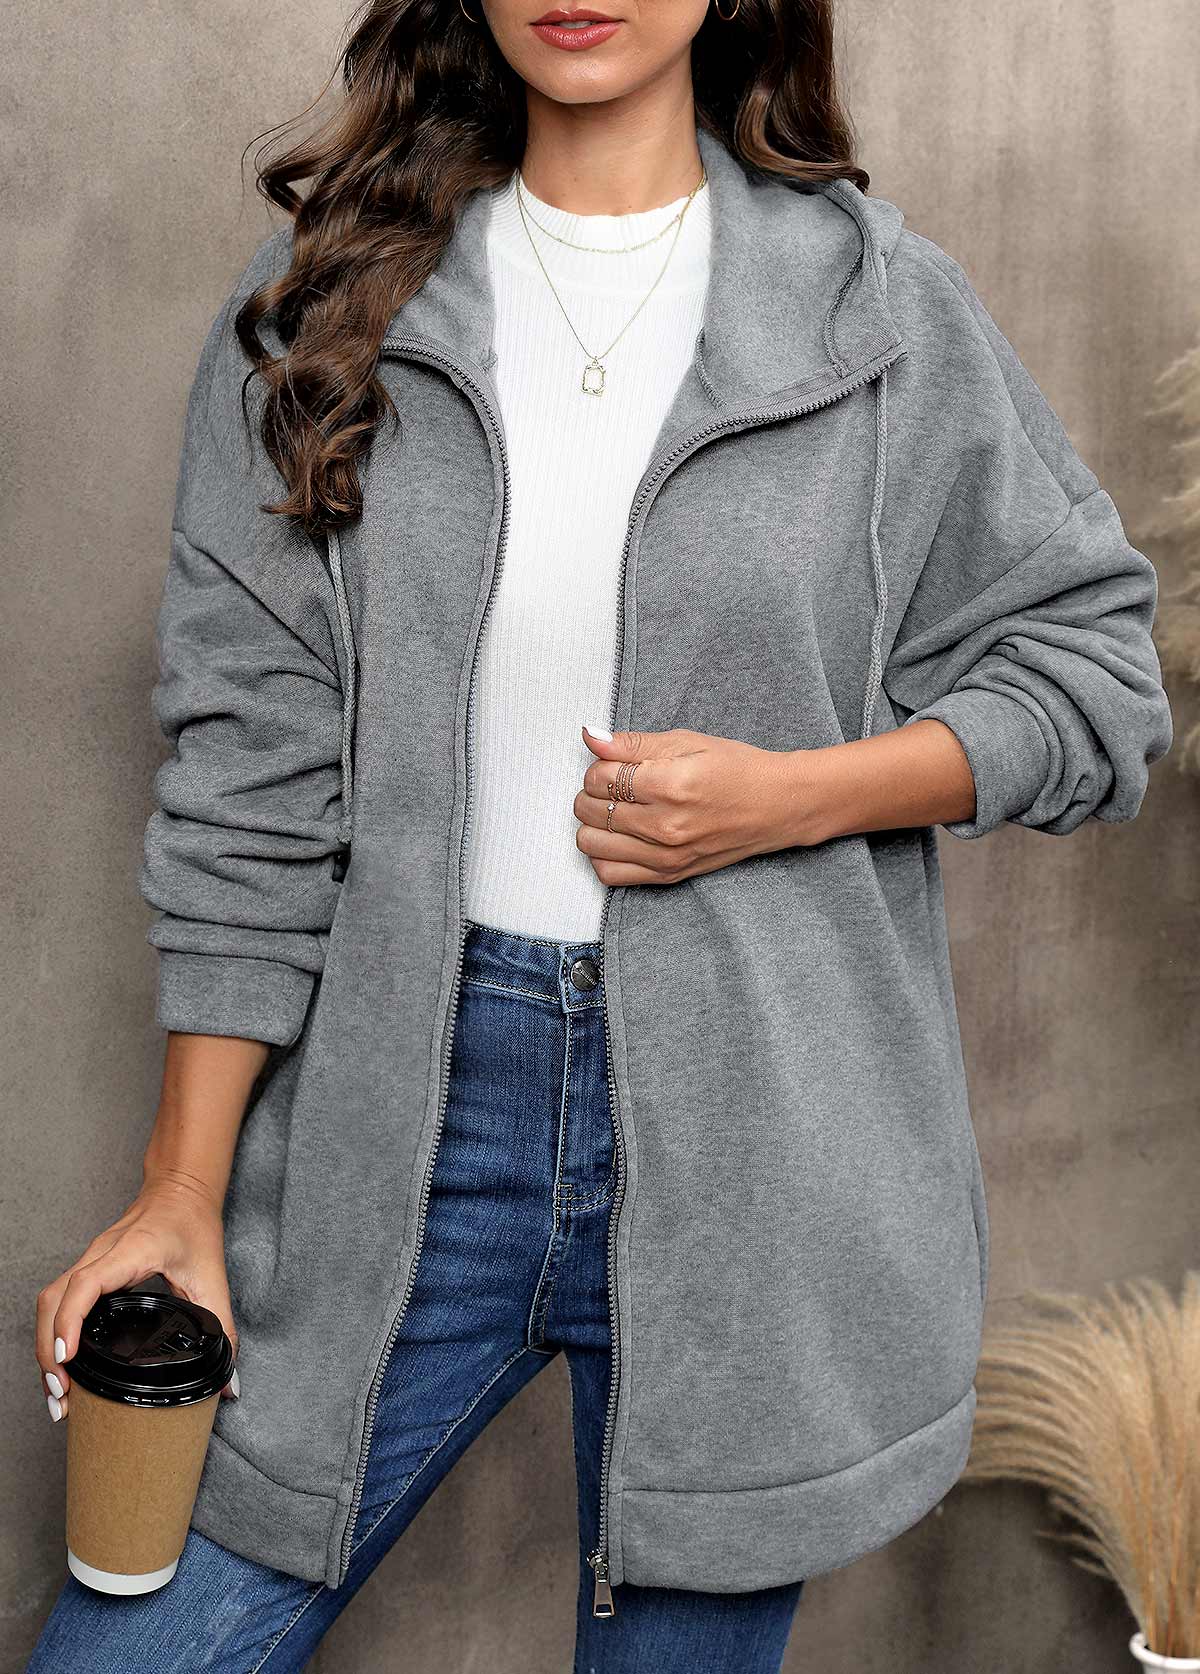 Grey Hooded Long Sleeve Zipper Coat